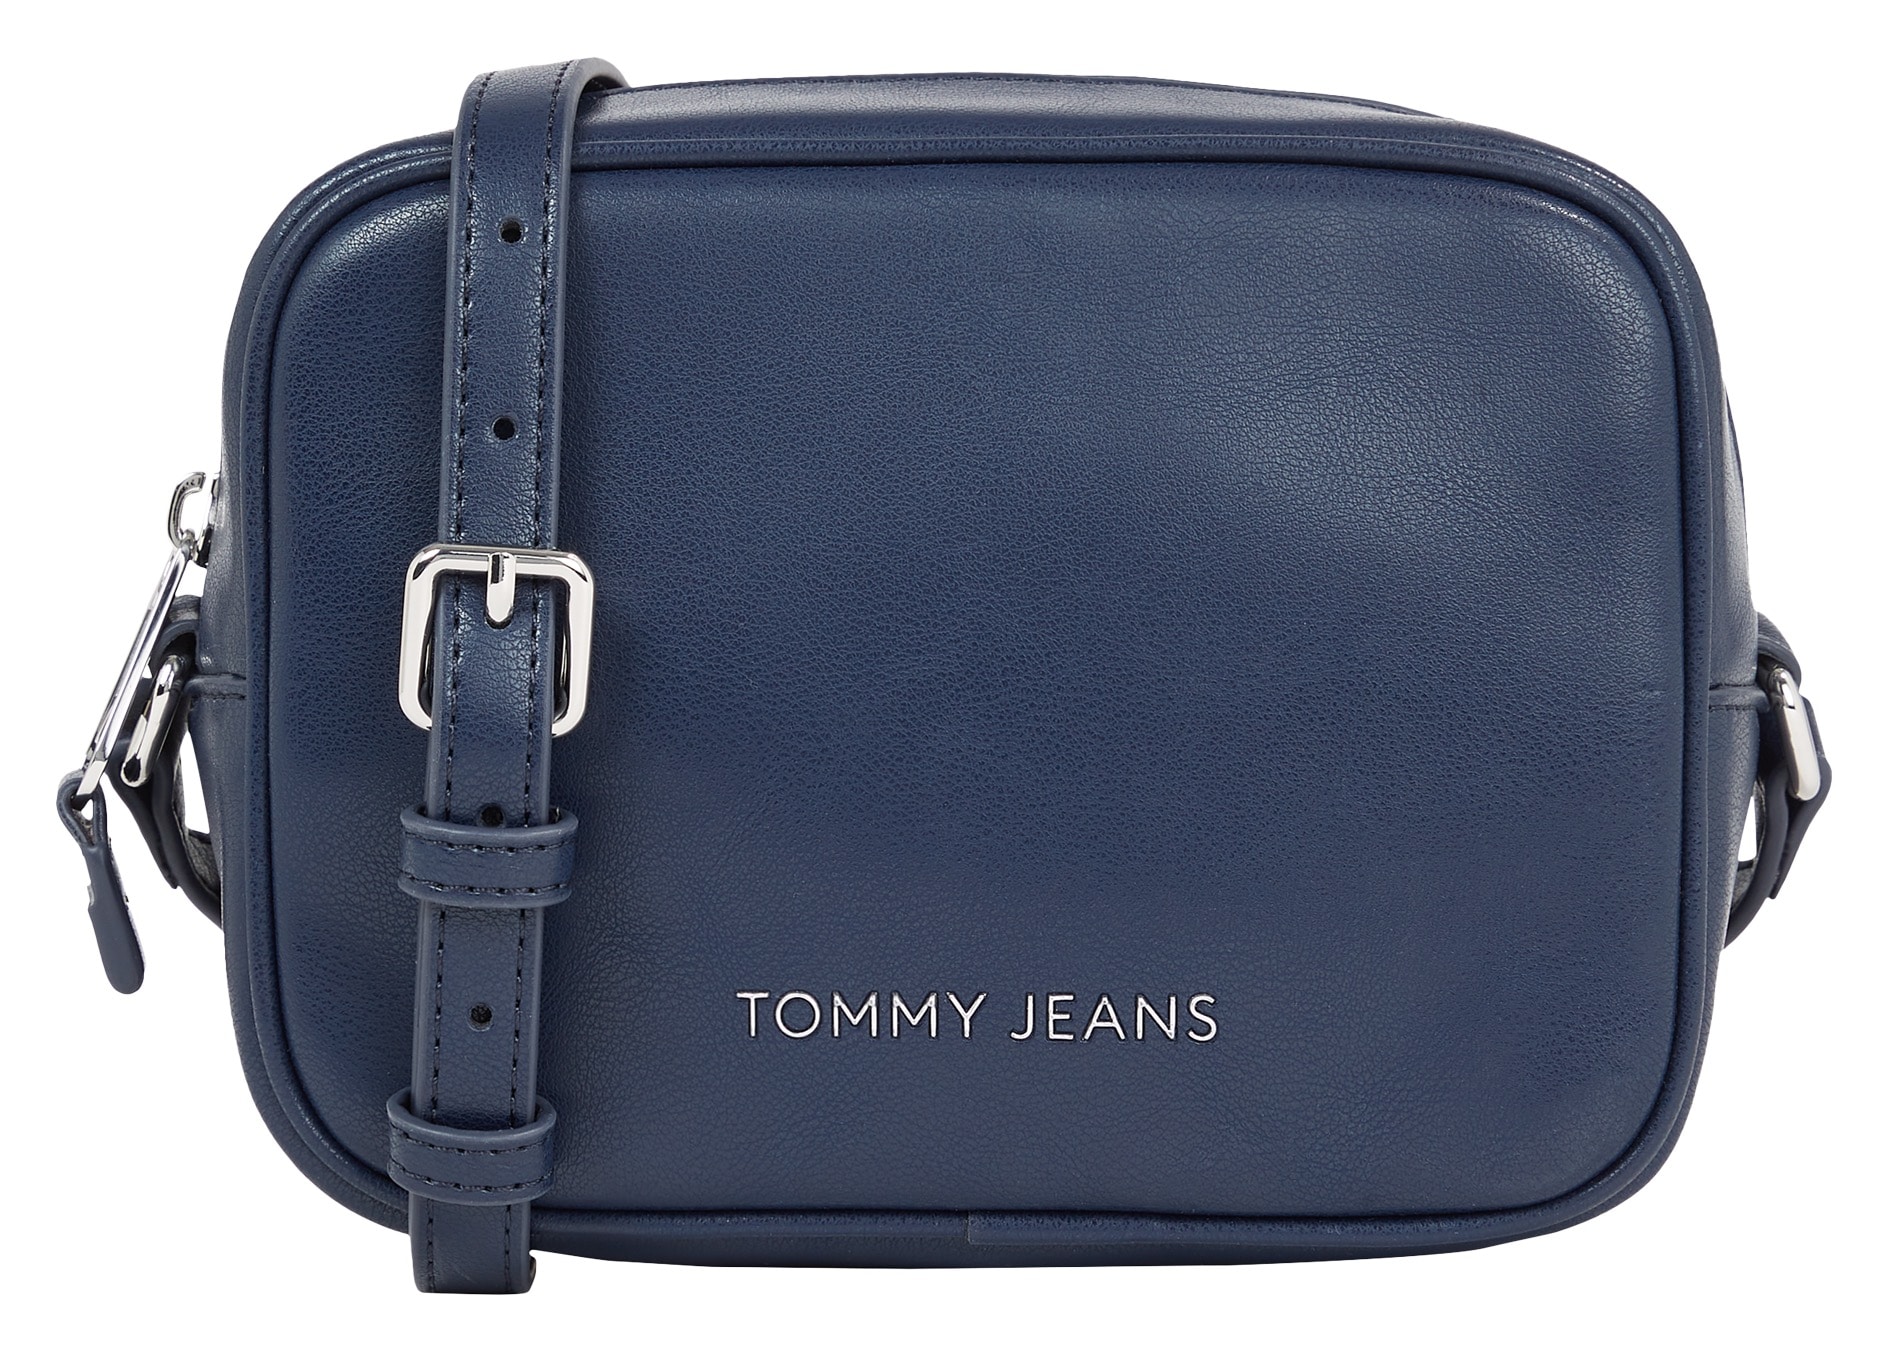 Umhängetasche Bag Mini kaufen »TJW walking | BAG«, Jeans Tommy ESS I\'m kleine online CAMERA MUST